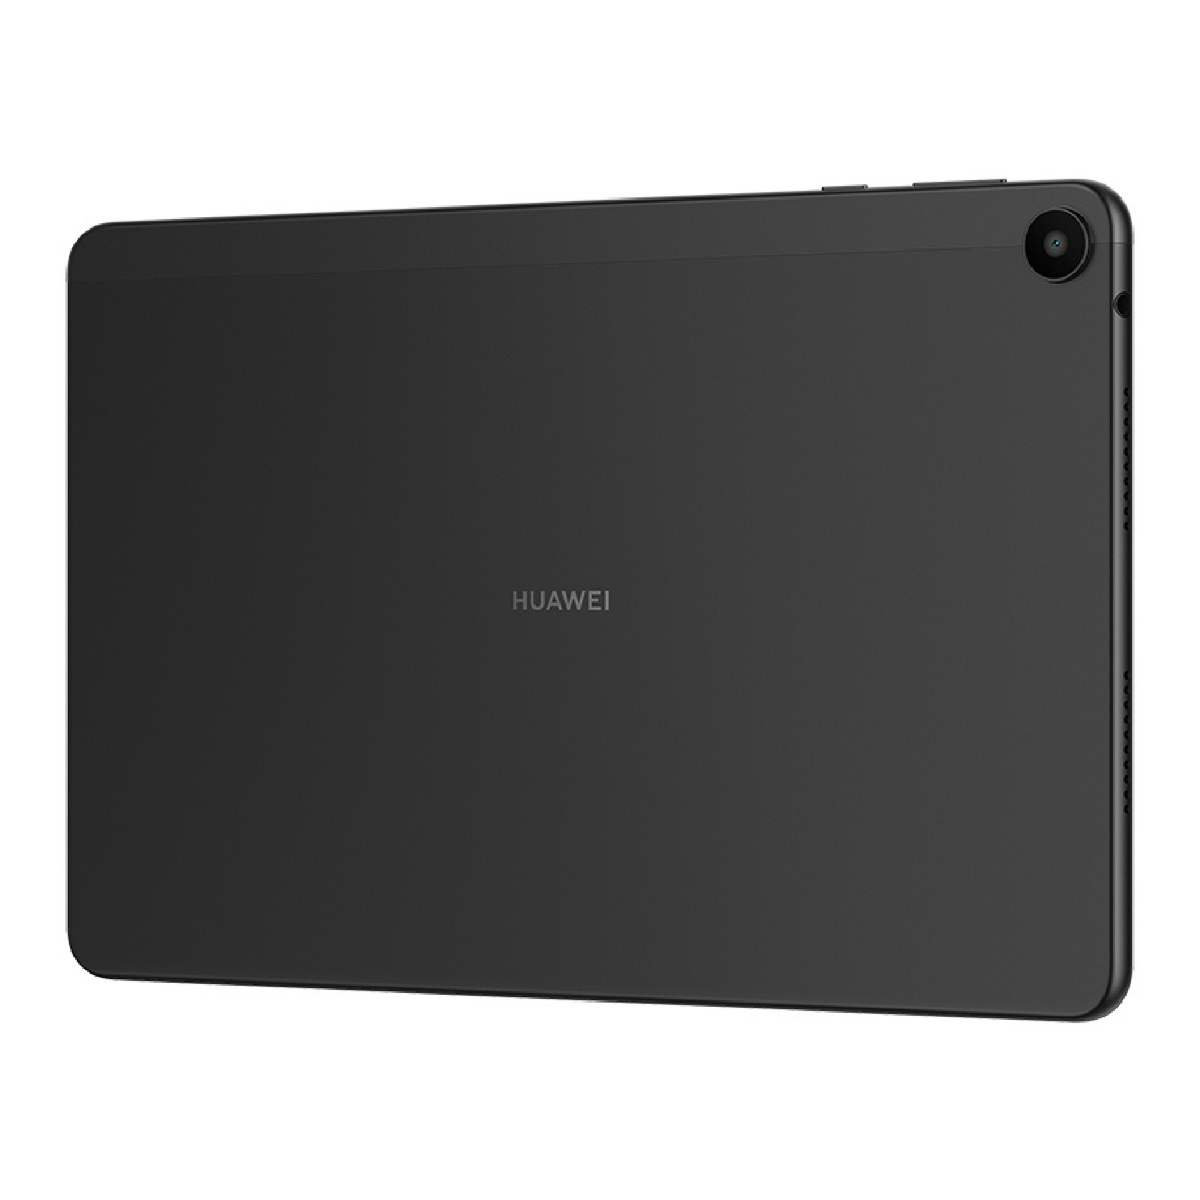 Huawei MatePad SE-L09 10.4inches,64GB ROM,4GB RAM,WiFi, 4G LTE, Graphite Black